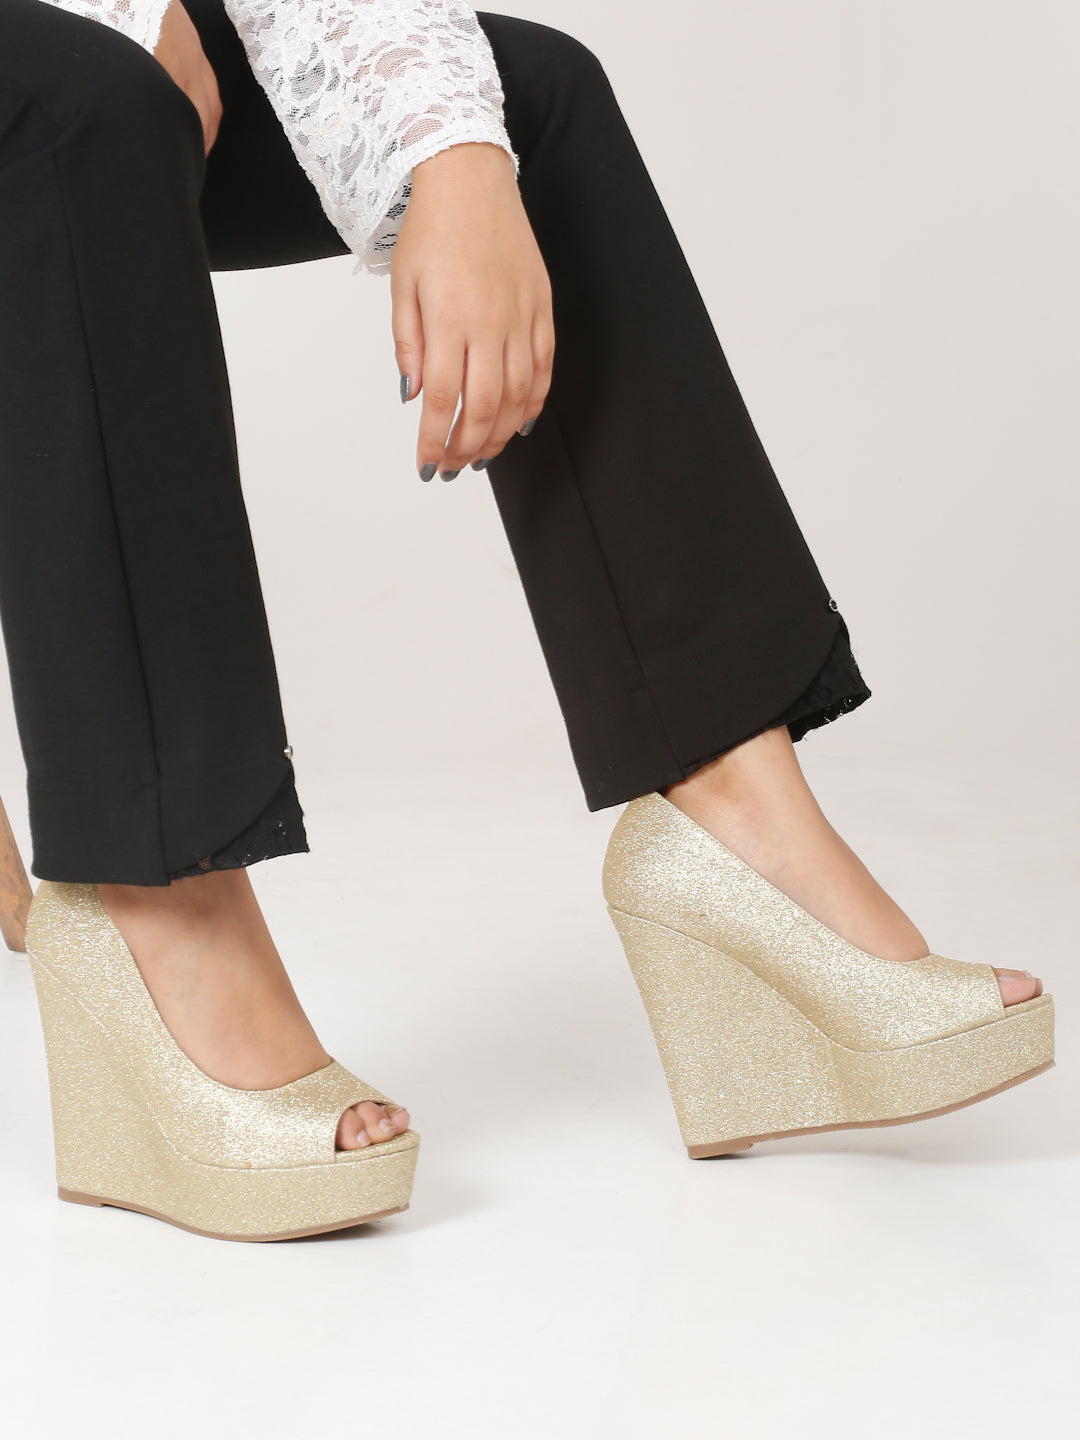 Amazon.com | keleimusi Mid Heel Slip On Pumps Studded Bow Heeled Sandals  for Women Beige | Shoes